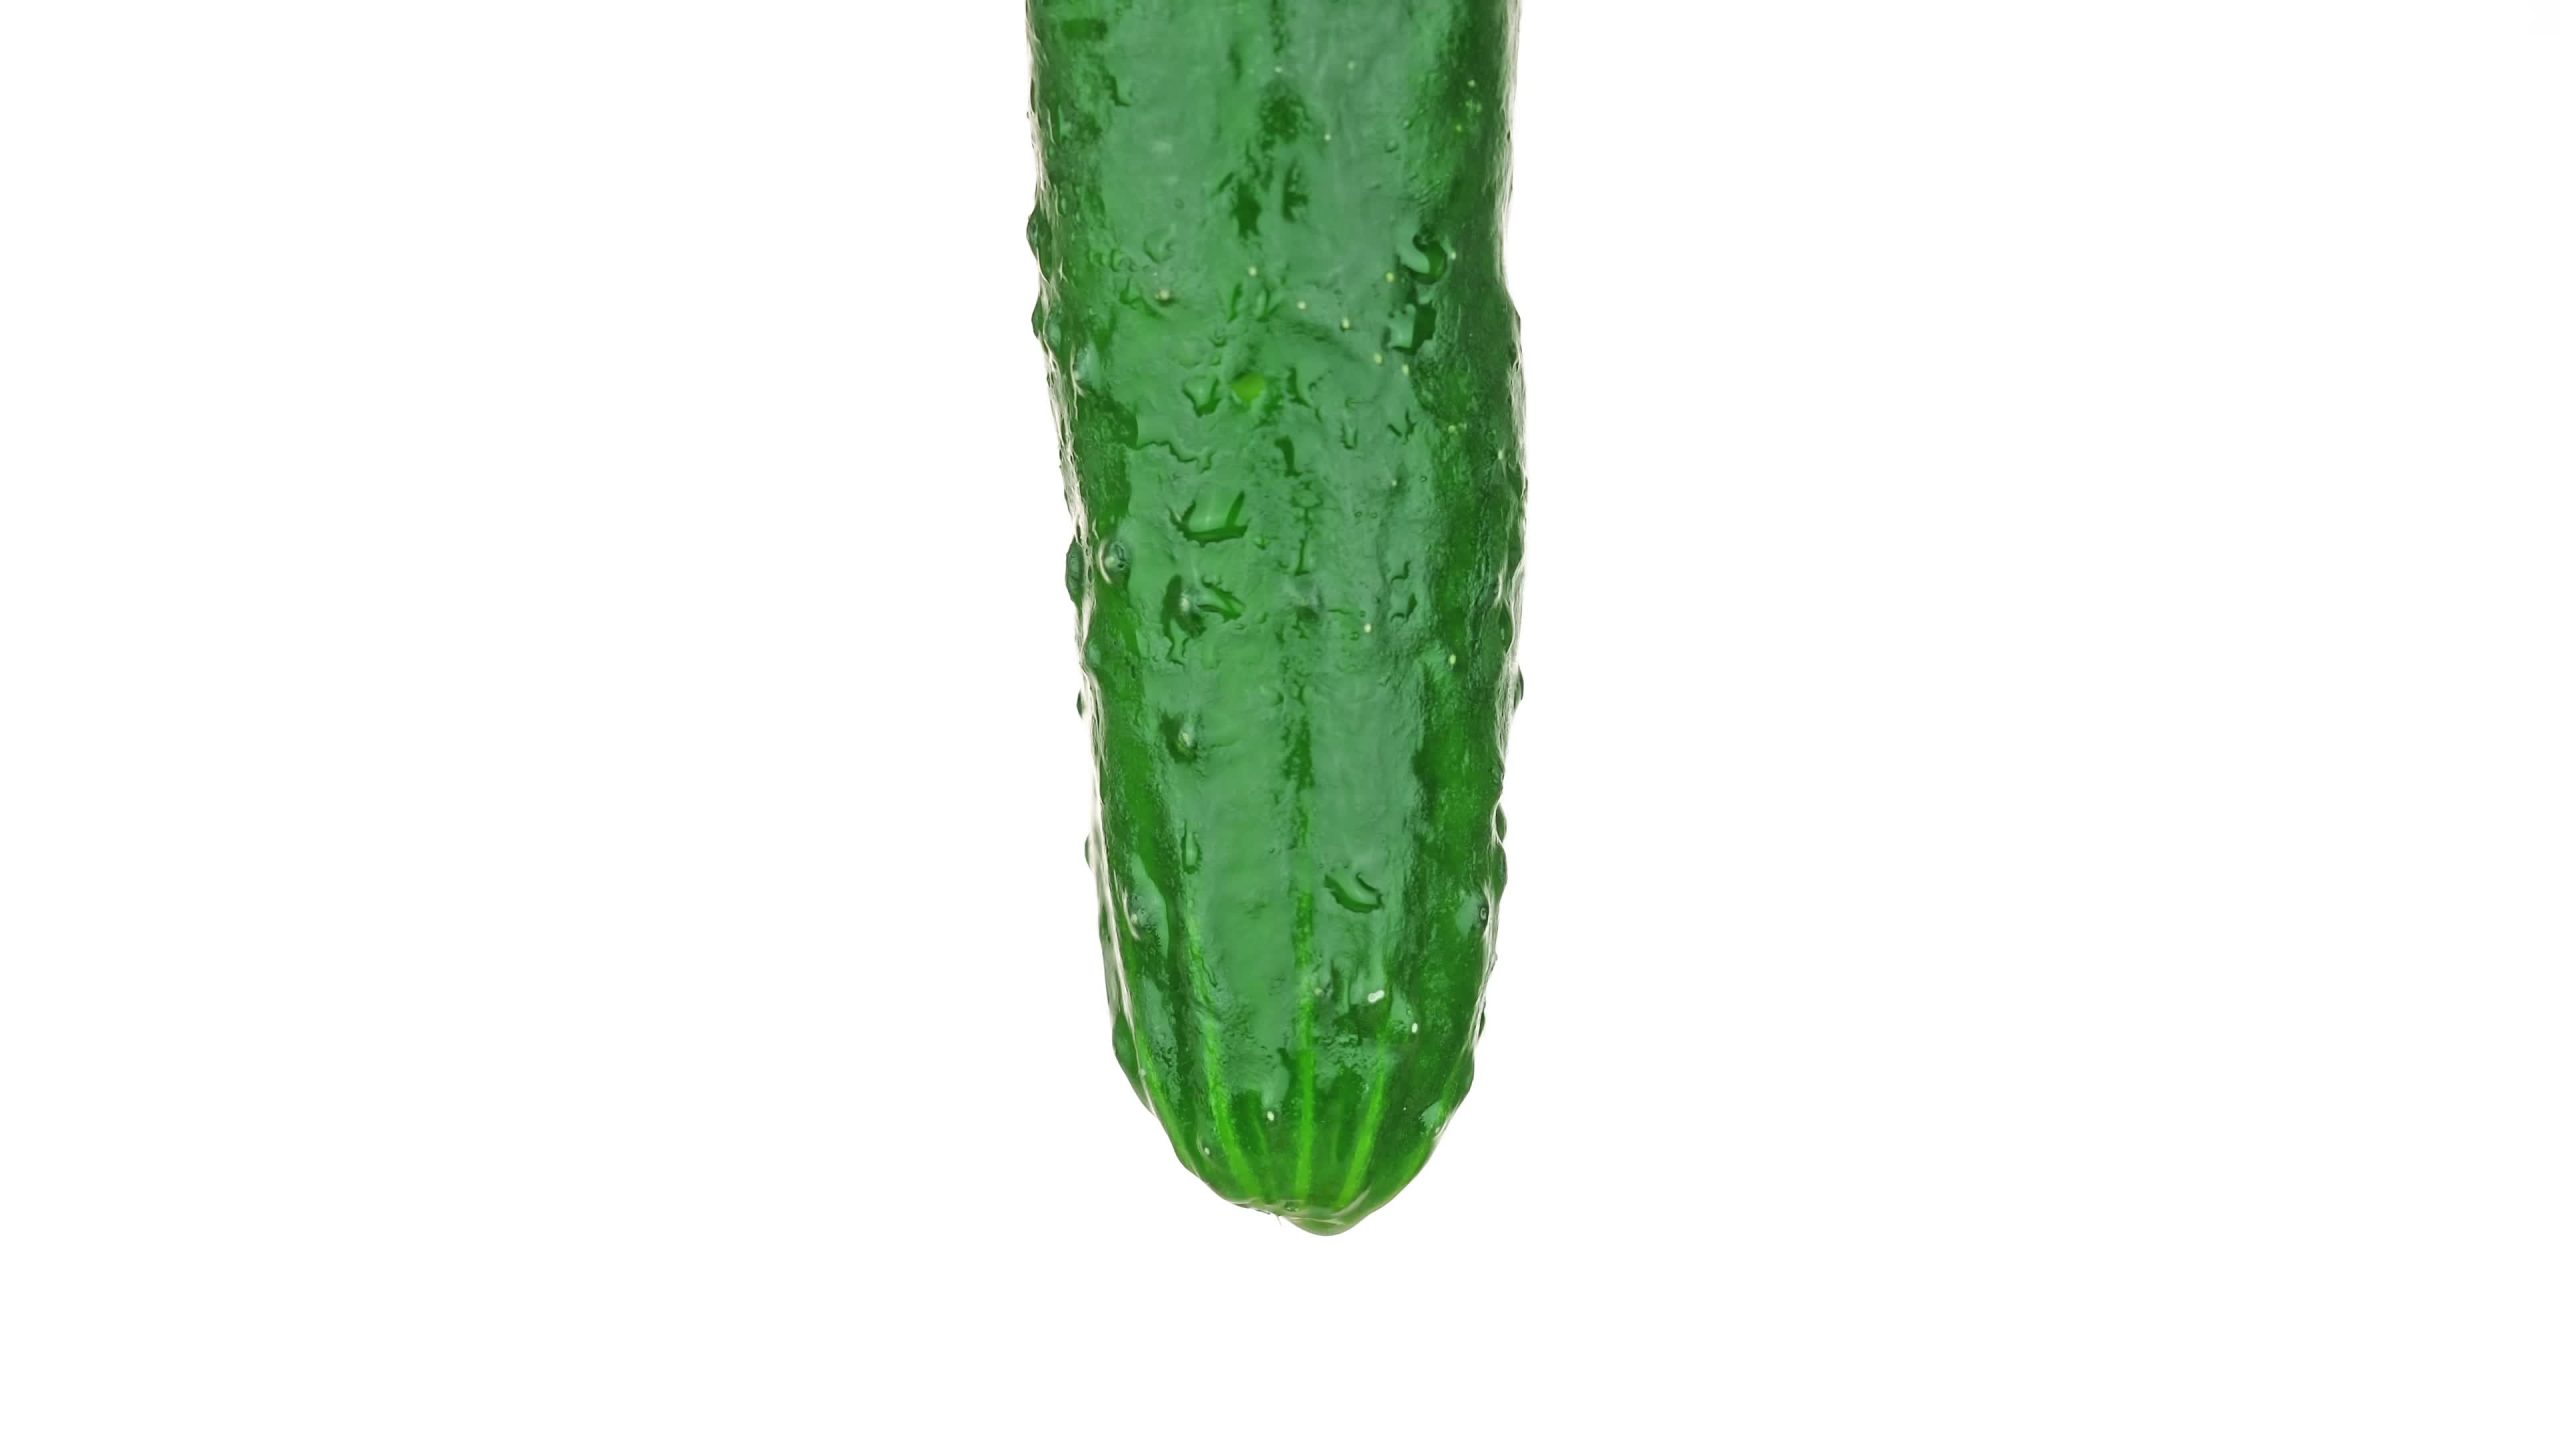 Tasty green cucumber rotates on white background